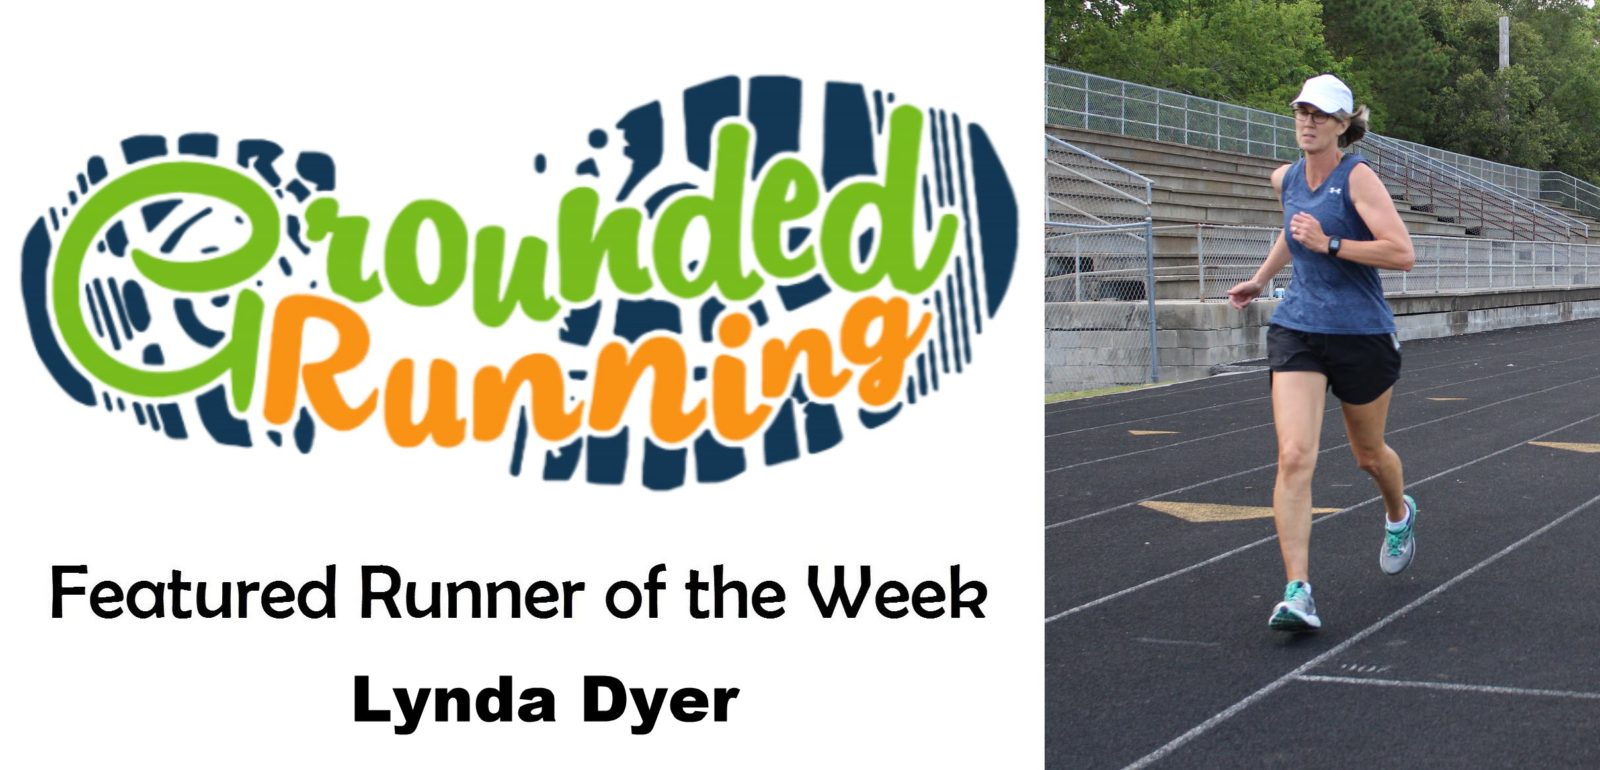 Lynda Dyer - Featured Runner of the Week